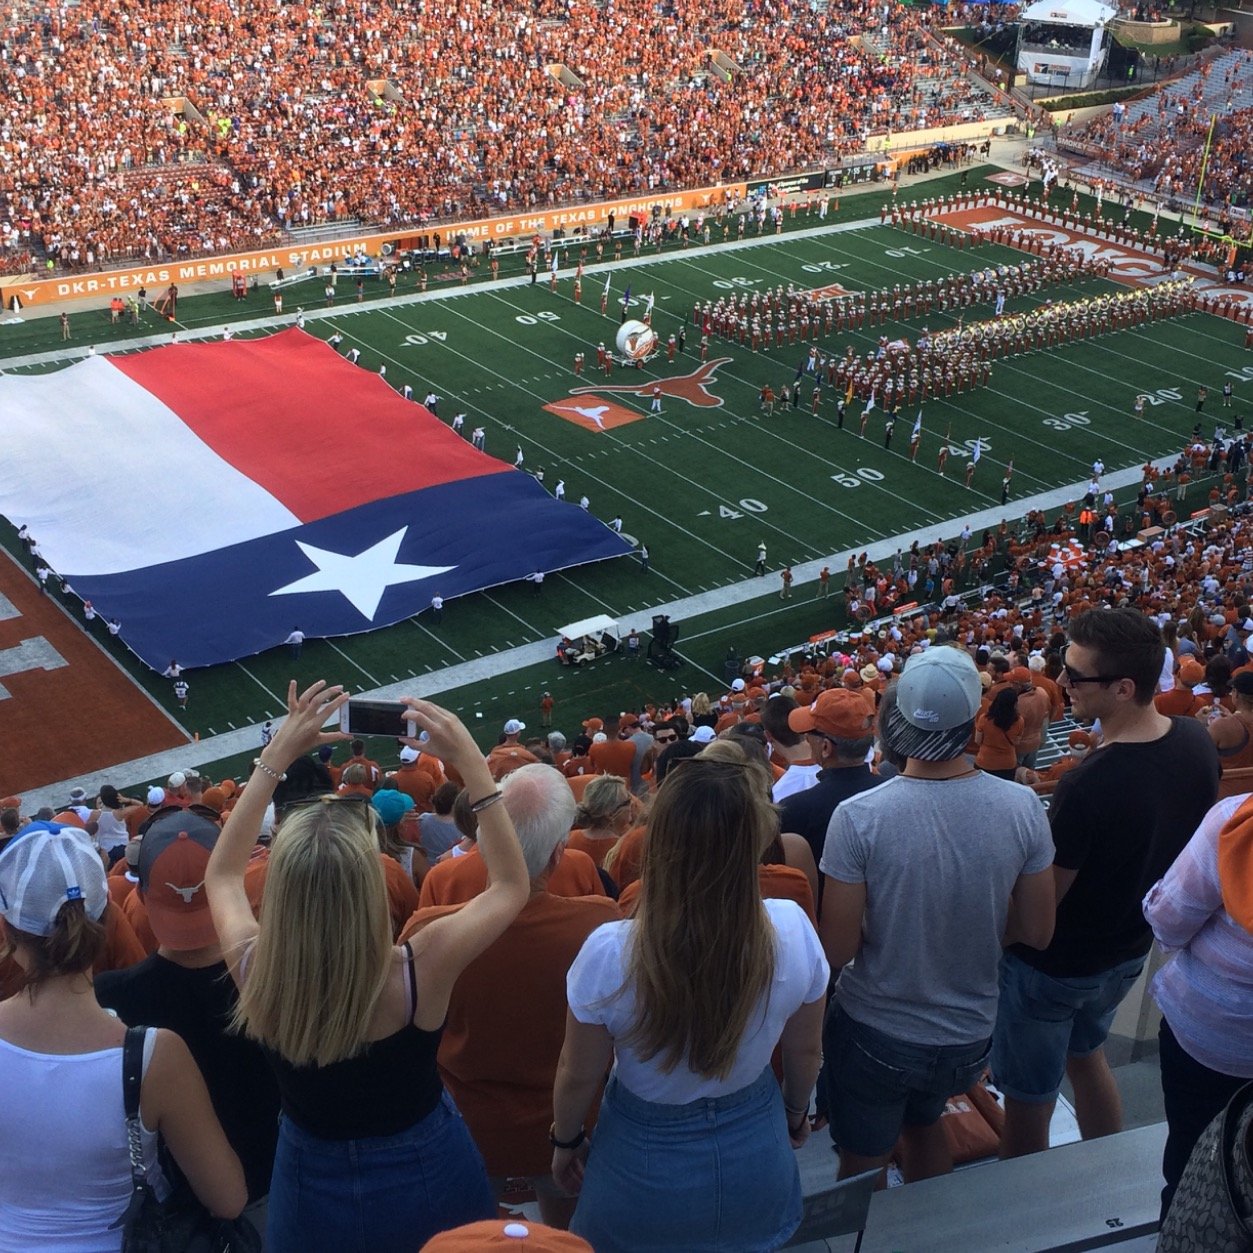 All about Sports,The University of Texas Everything🐂, #DallasCowboys⭐️, #HoustonRockets🚀, #HoustonAstros⚾️ Let's talk sports! #Hookem🤘🏽